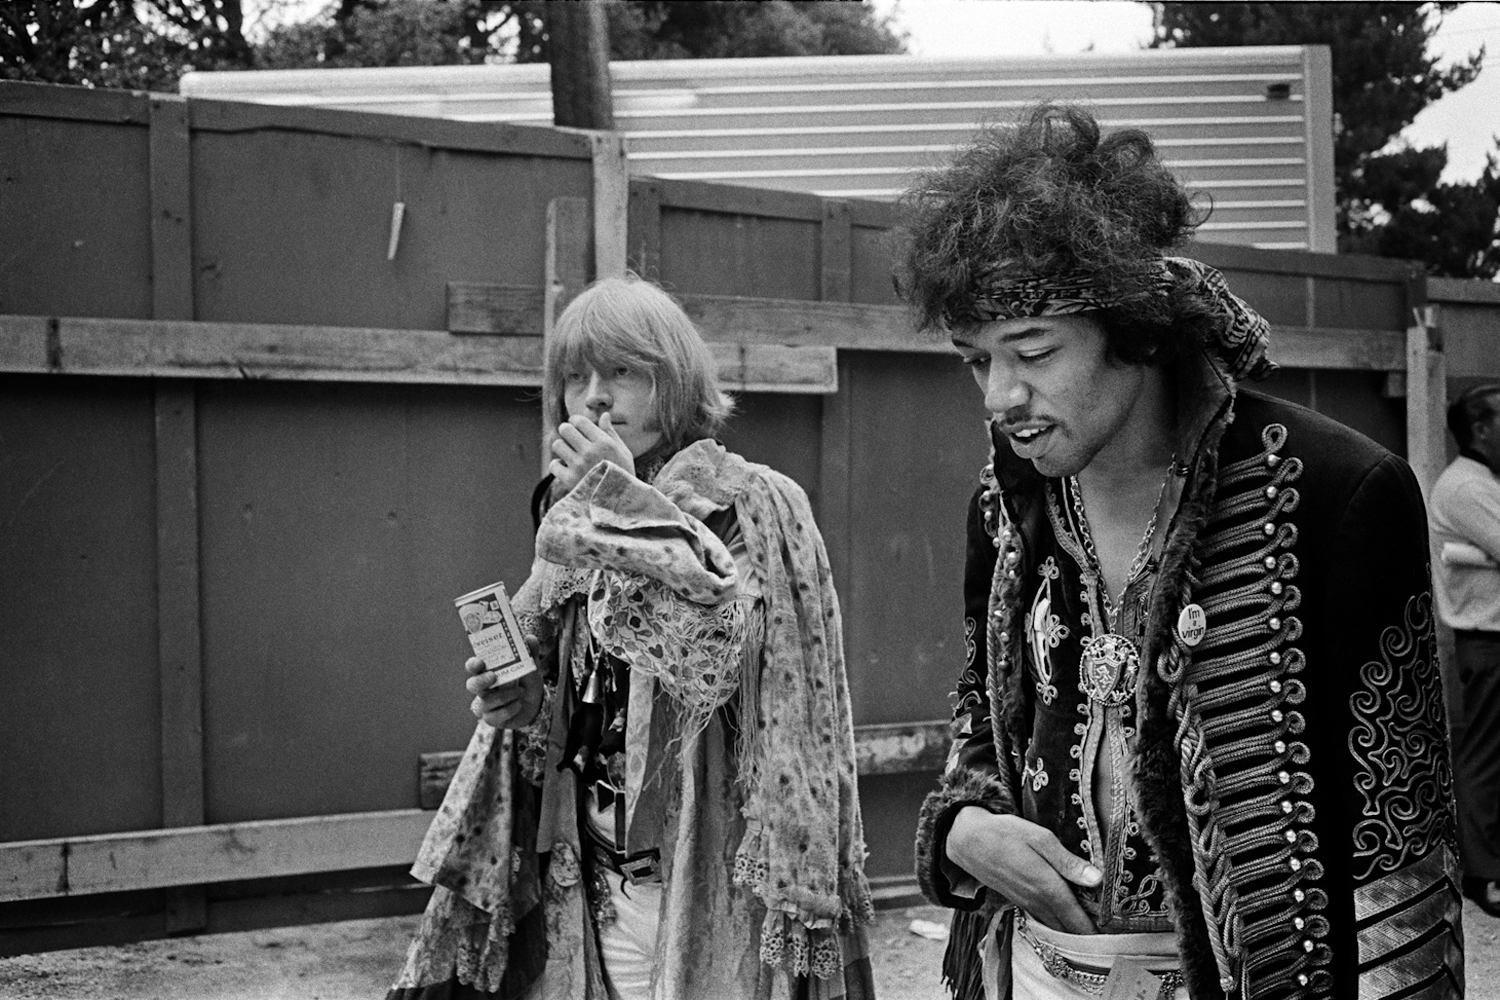 Image: Jimi Hendrix and Brian Jones walk backstage at Monterey Pop Festival, 1967.